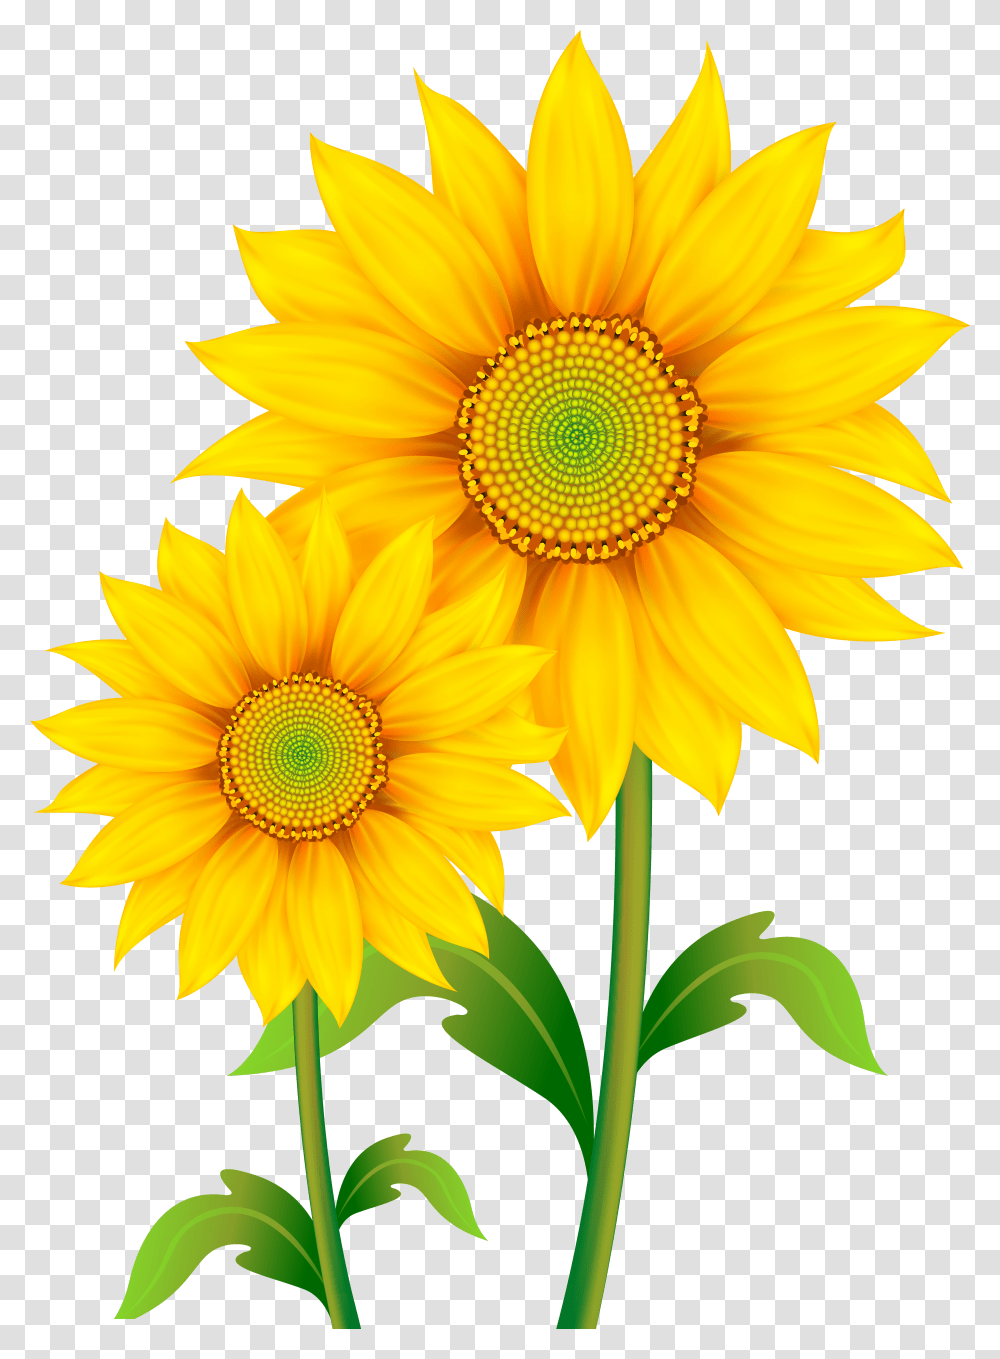 Common Sunflower Clip Art Background Sunflower Clipart Transparent Png